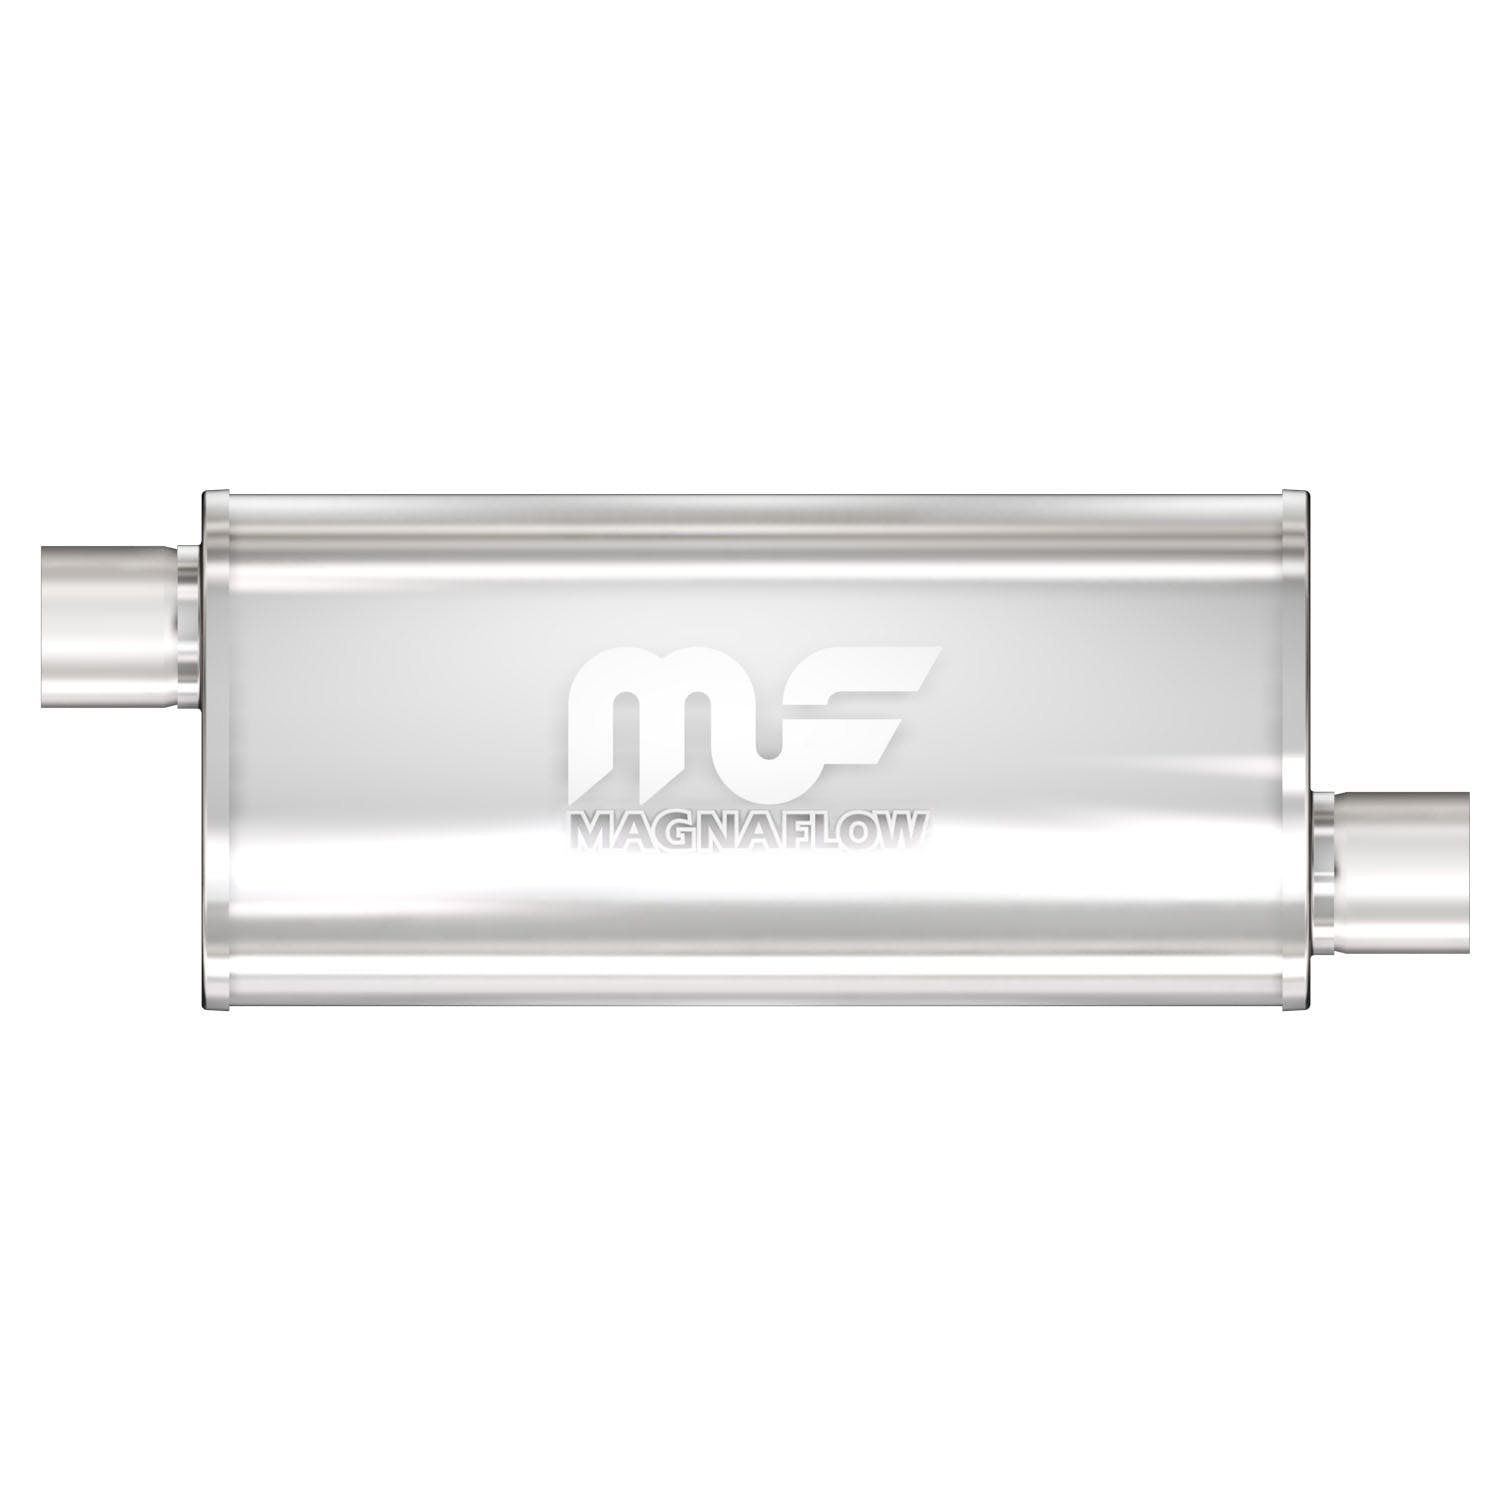 MagnaFlow Exhaust Products 14235 Universal Muffler